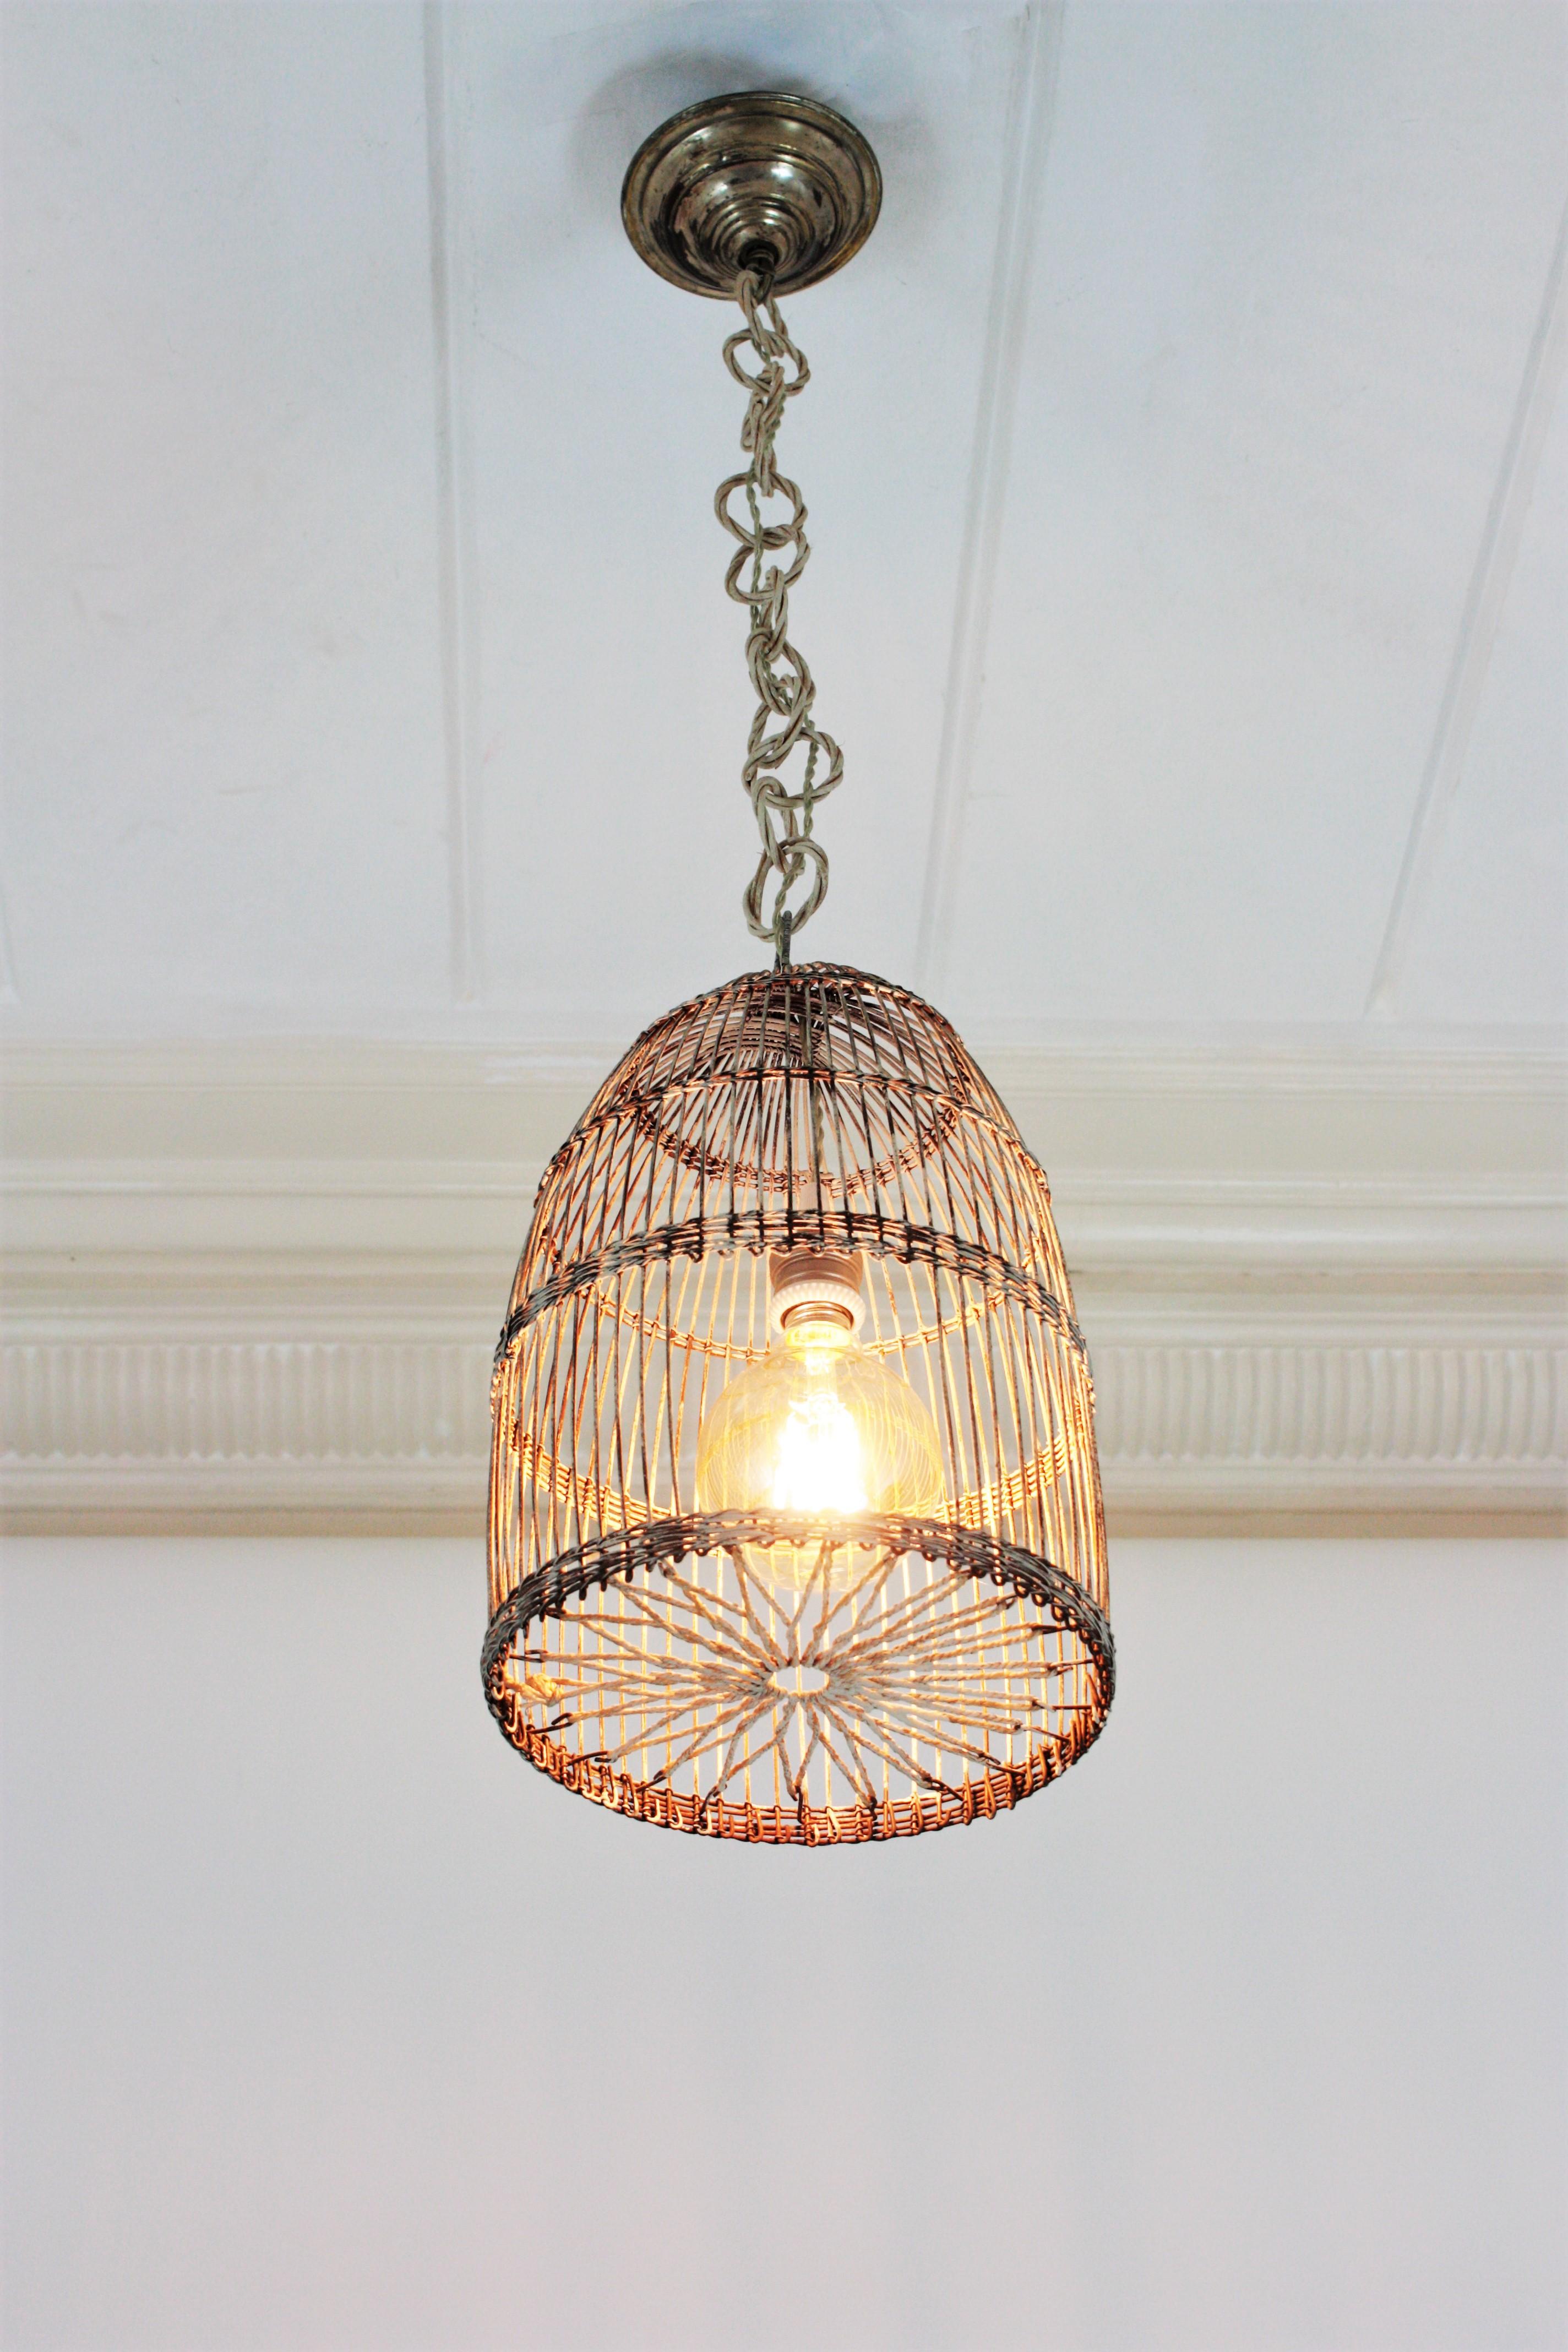 20th Century Birdcage Rustic Hanging Light Pendant Lamp